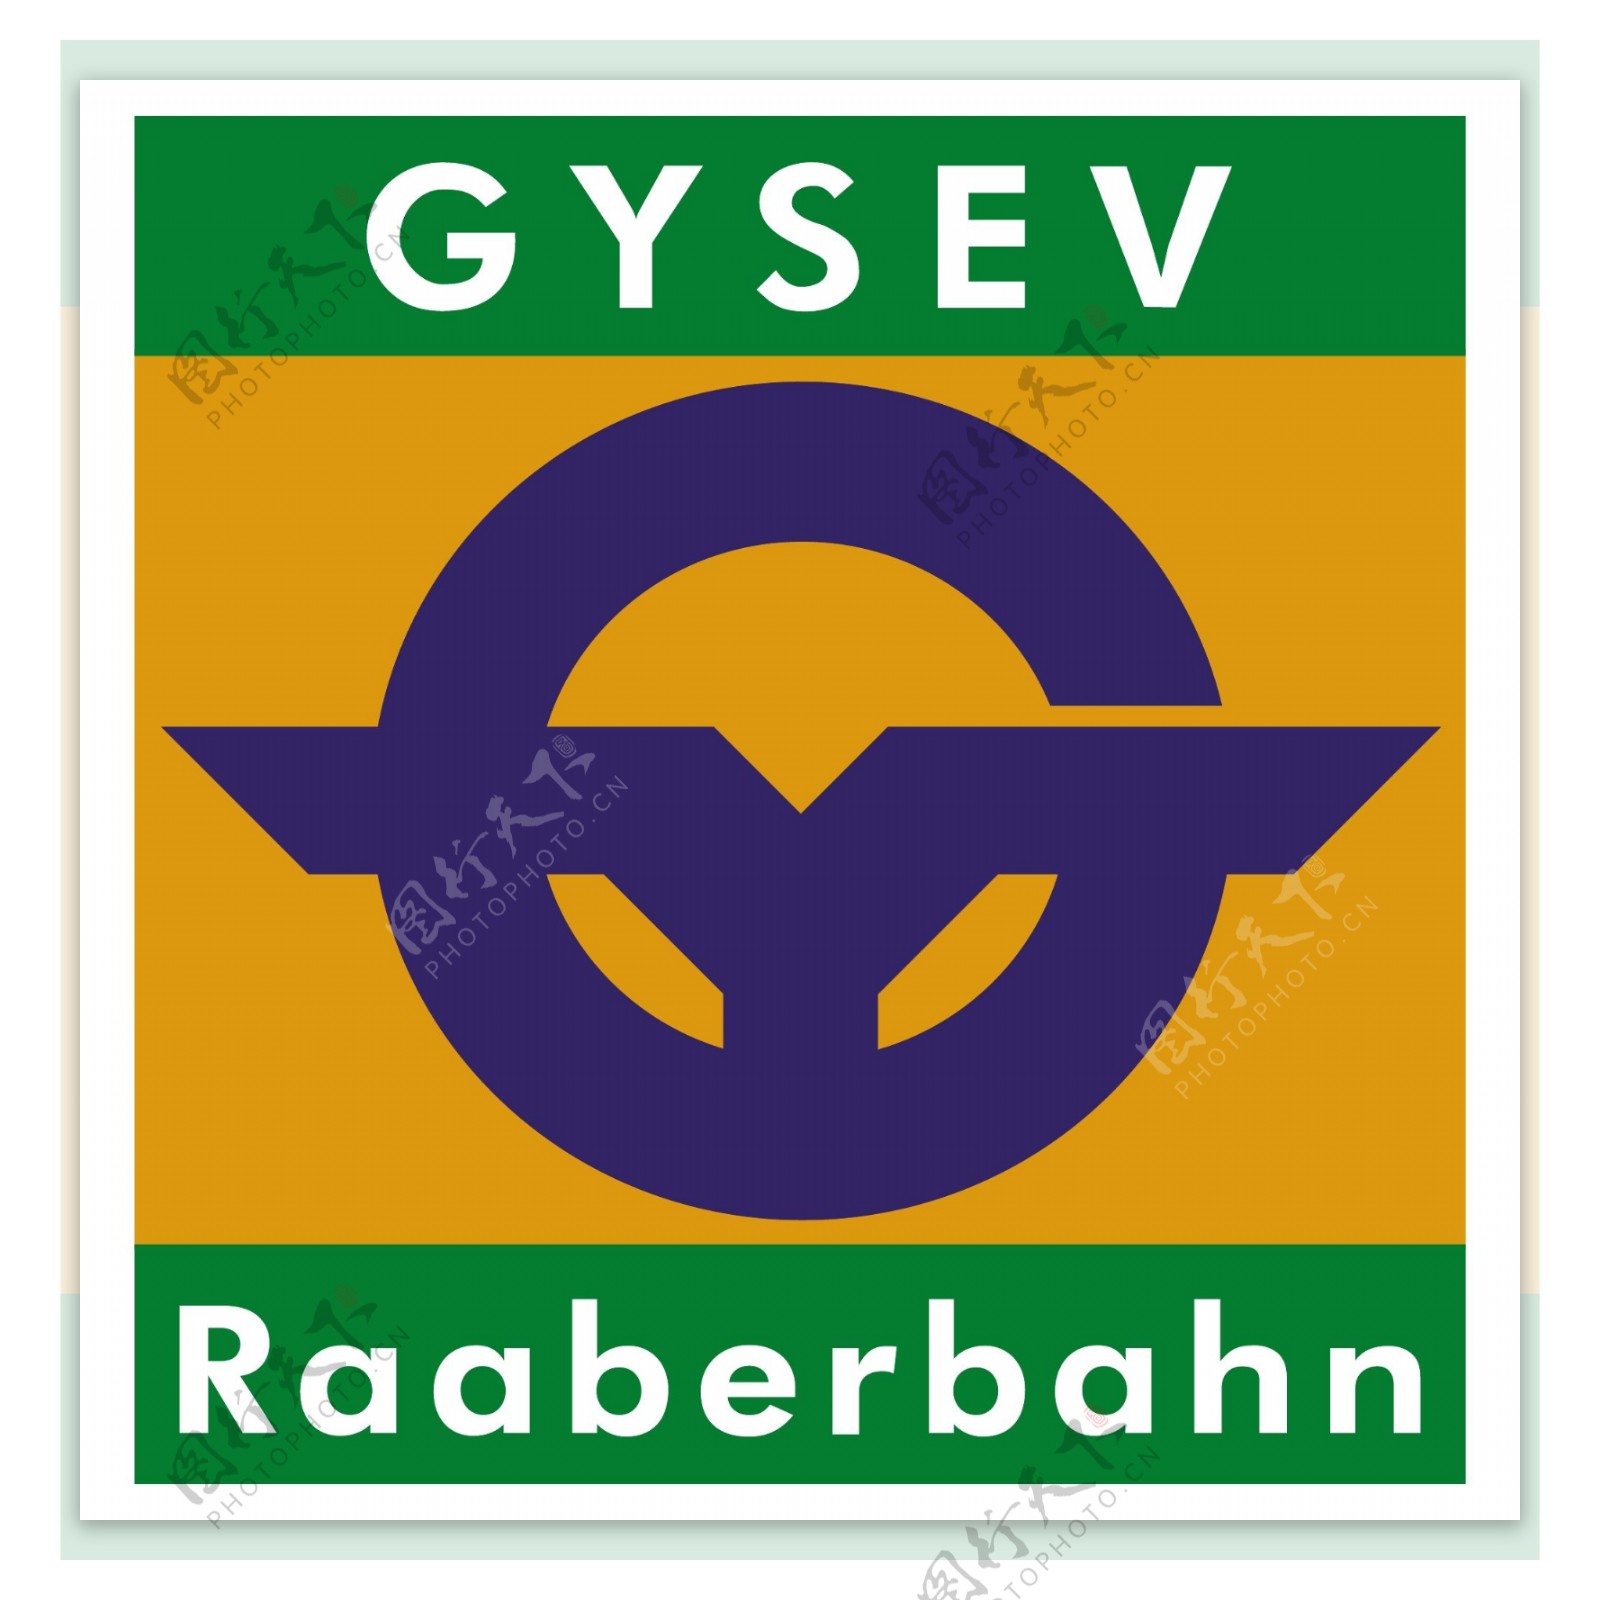 GYSEVRaaberbahnlogo设计欣赏GYSEVRaaberbahn物流快递标志下载标志设计欣赏